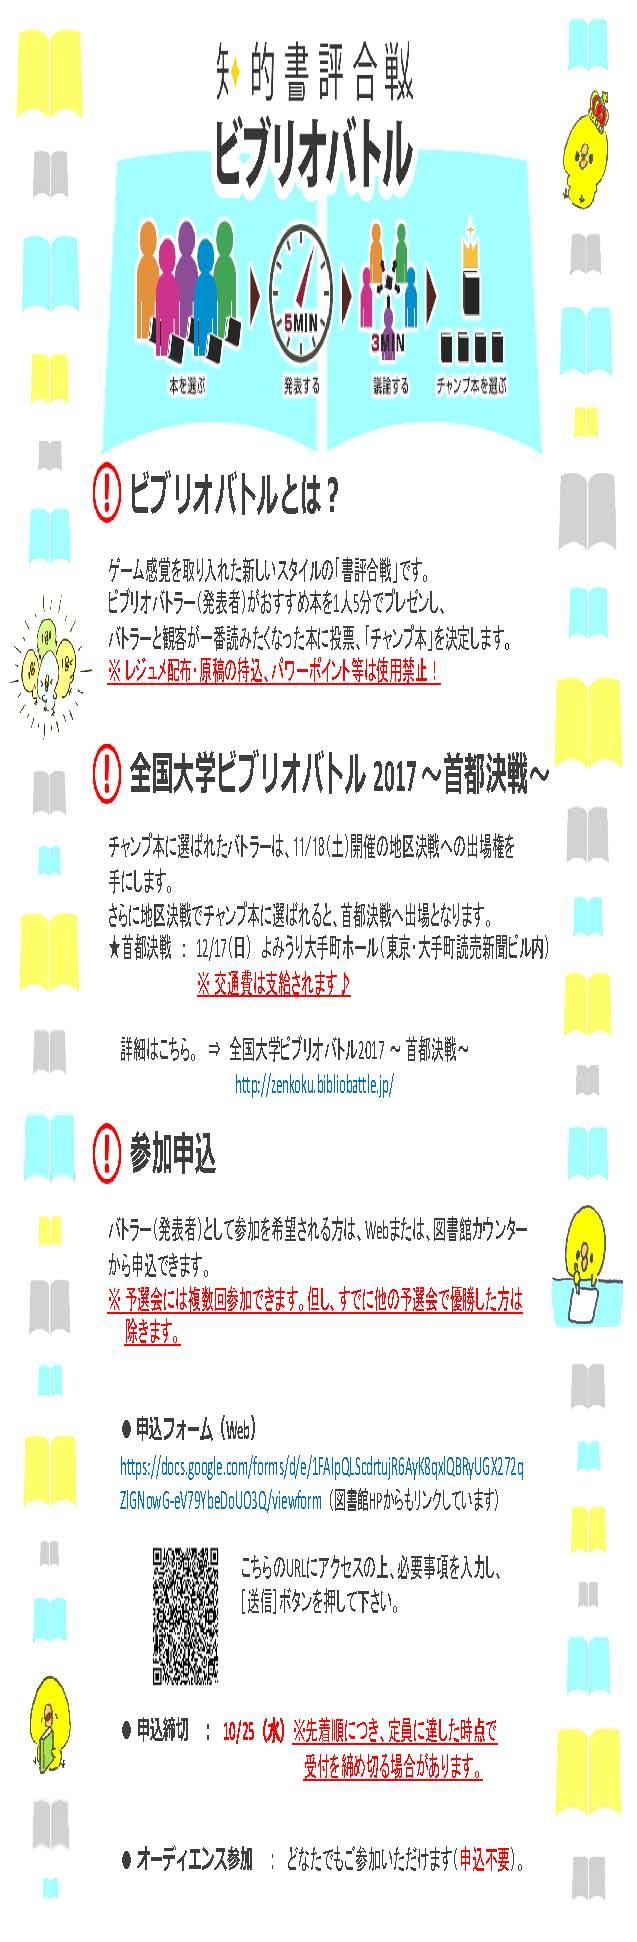 https://www.tohoku-gakuin.ac.jp/info/content/171012-1_3.jpg